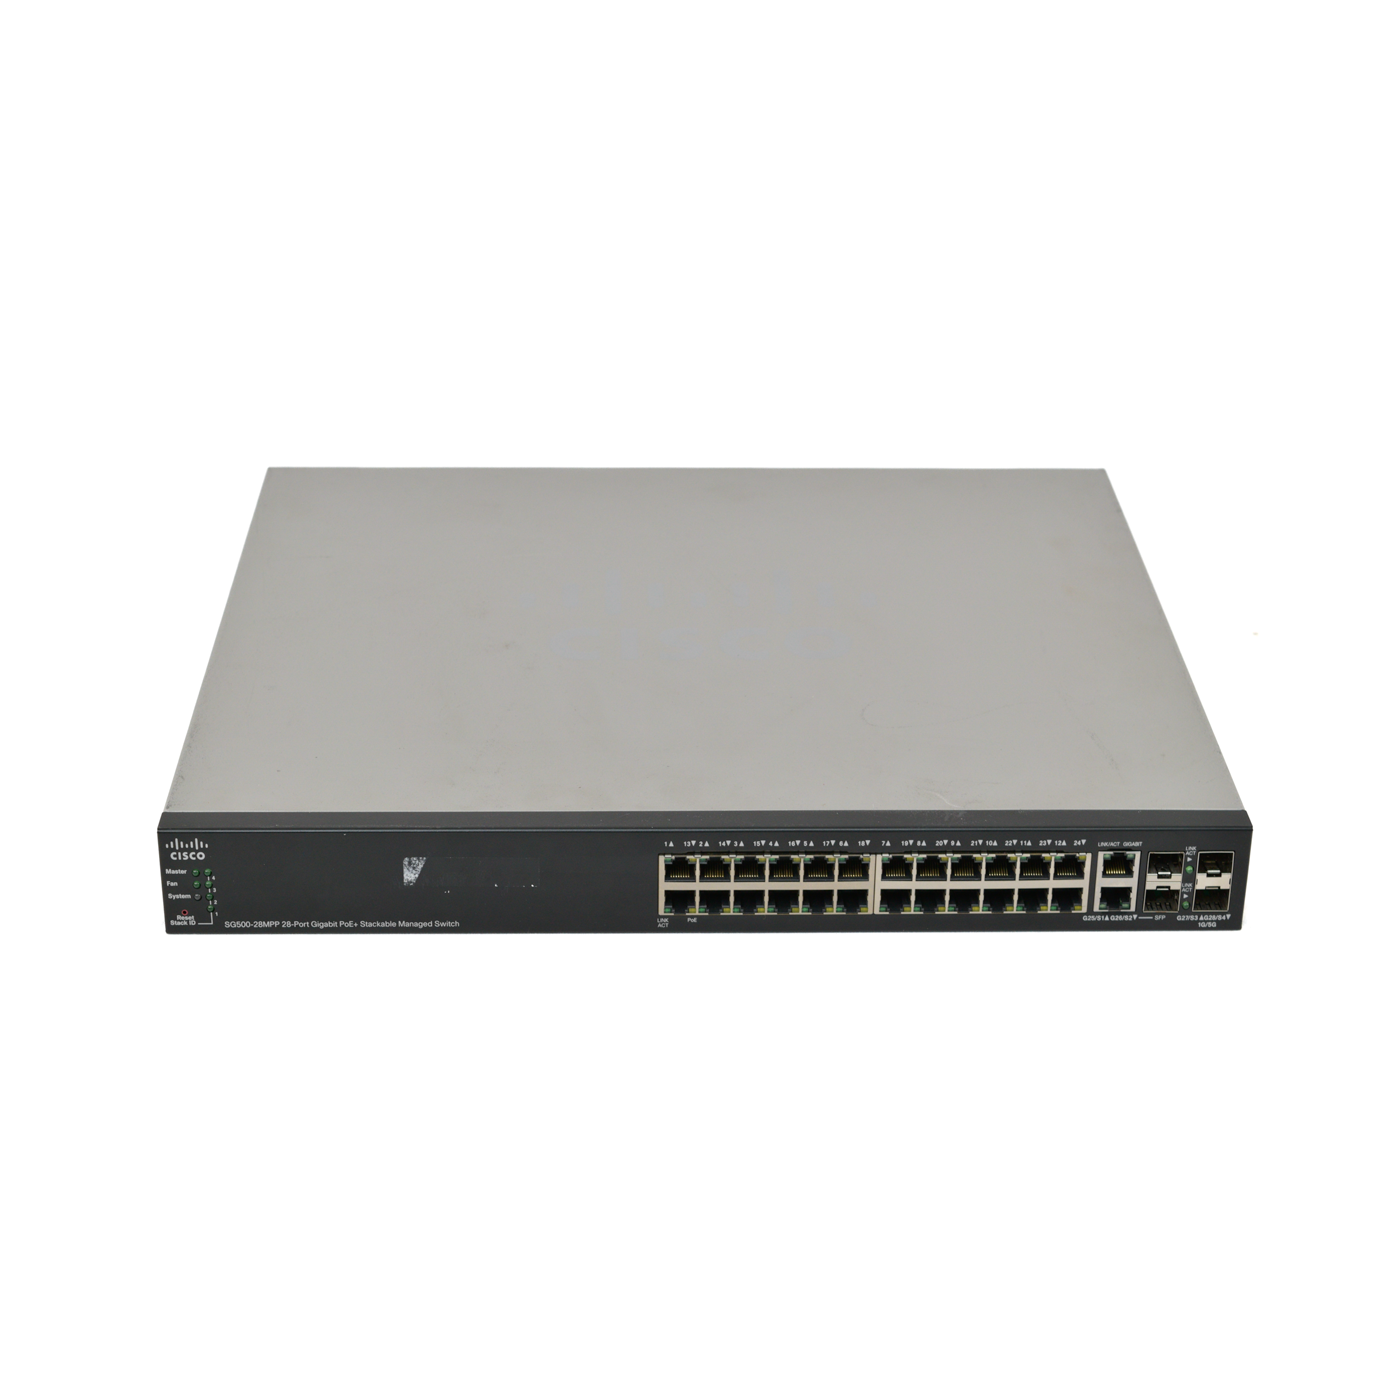 Cisco SG500-28MPP-K9 24 10/100/1000 PoE+ ports SG500-28P-K9 